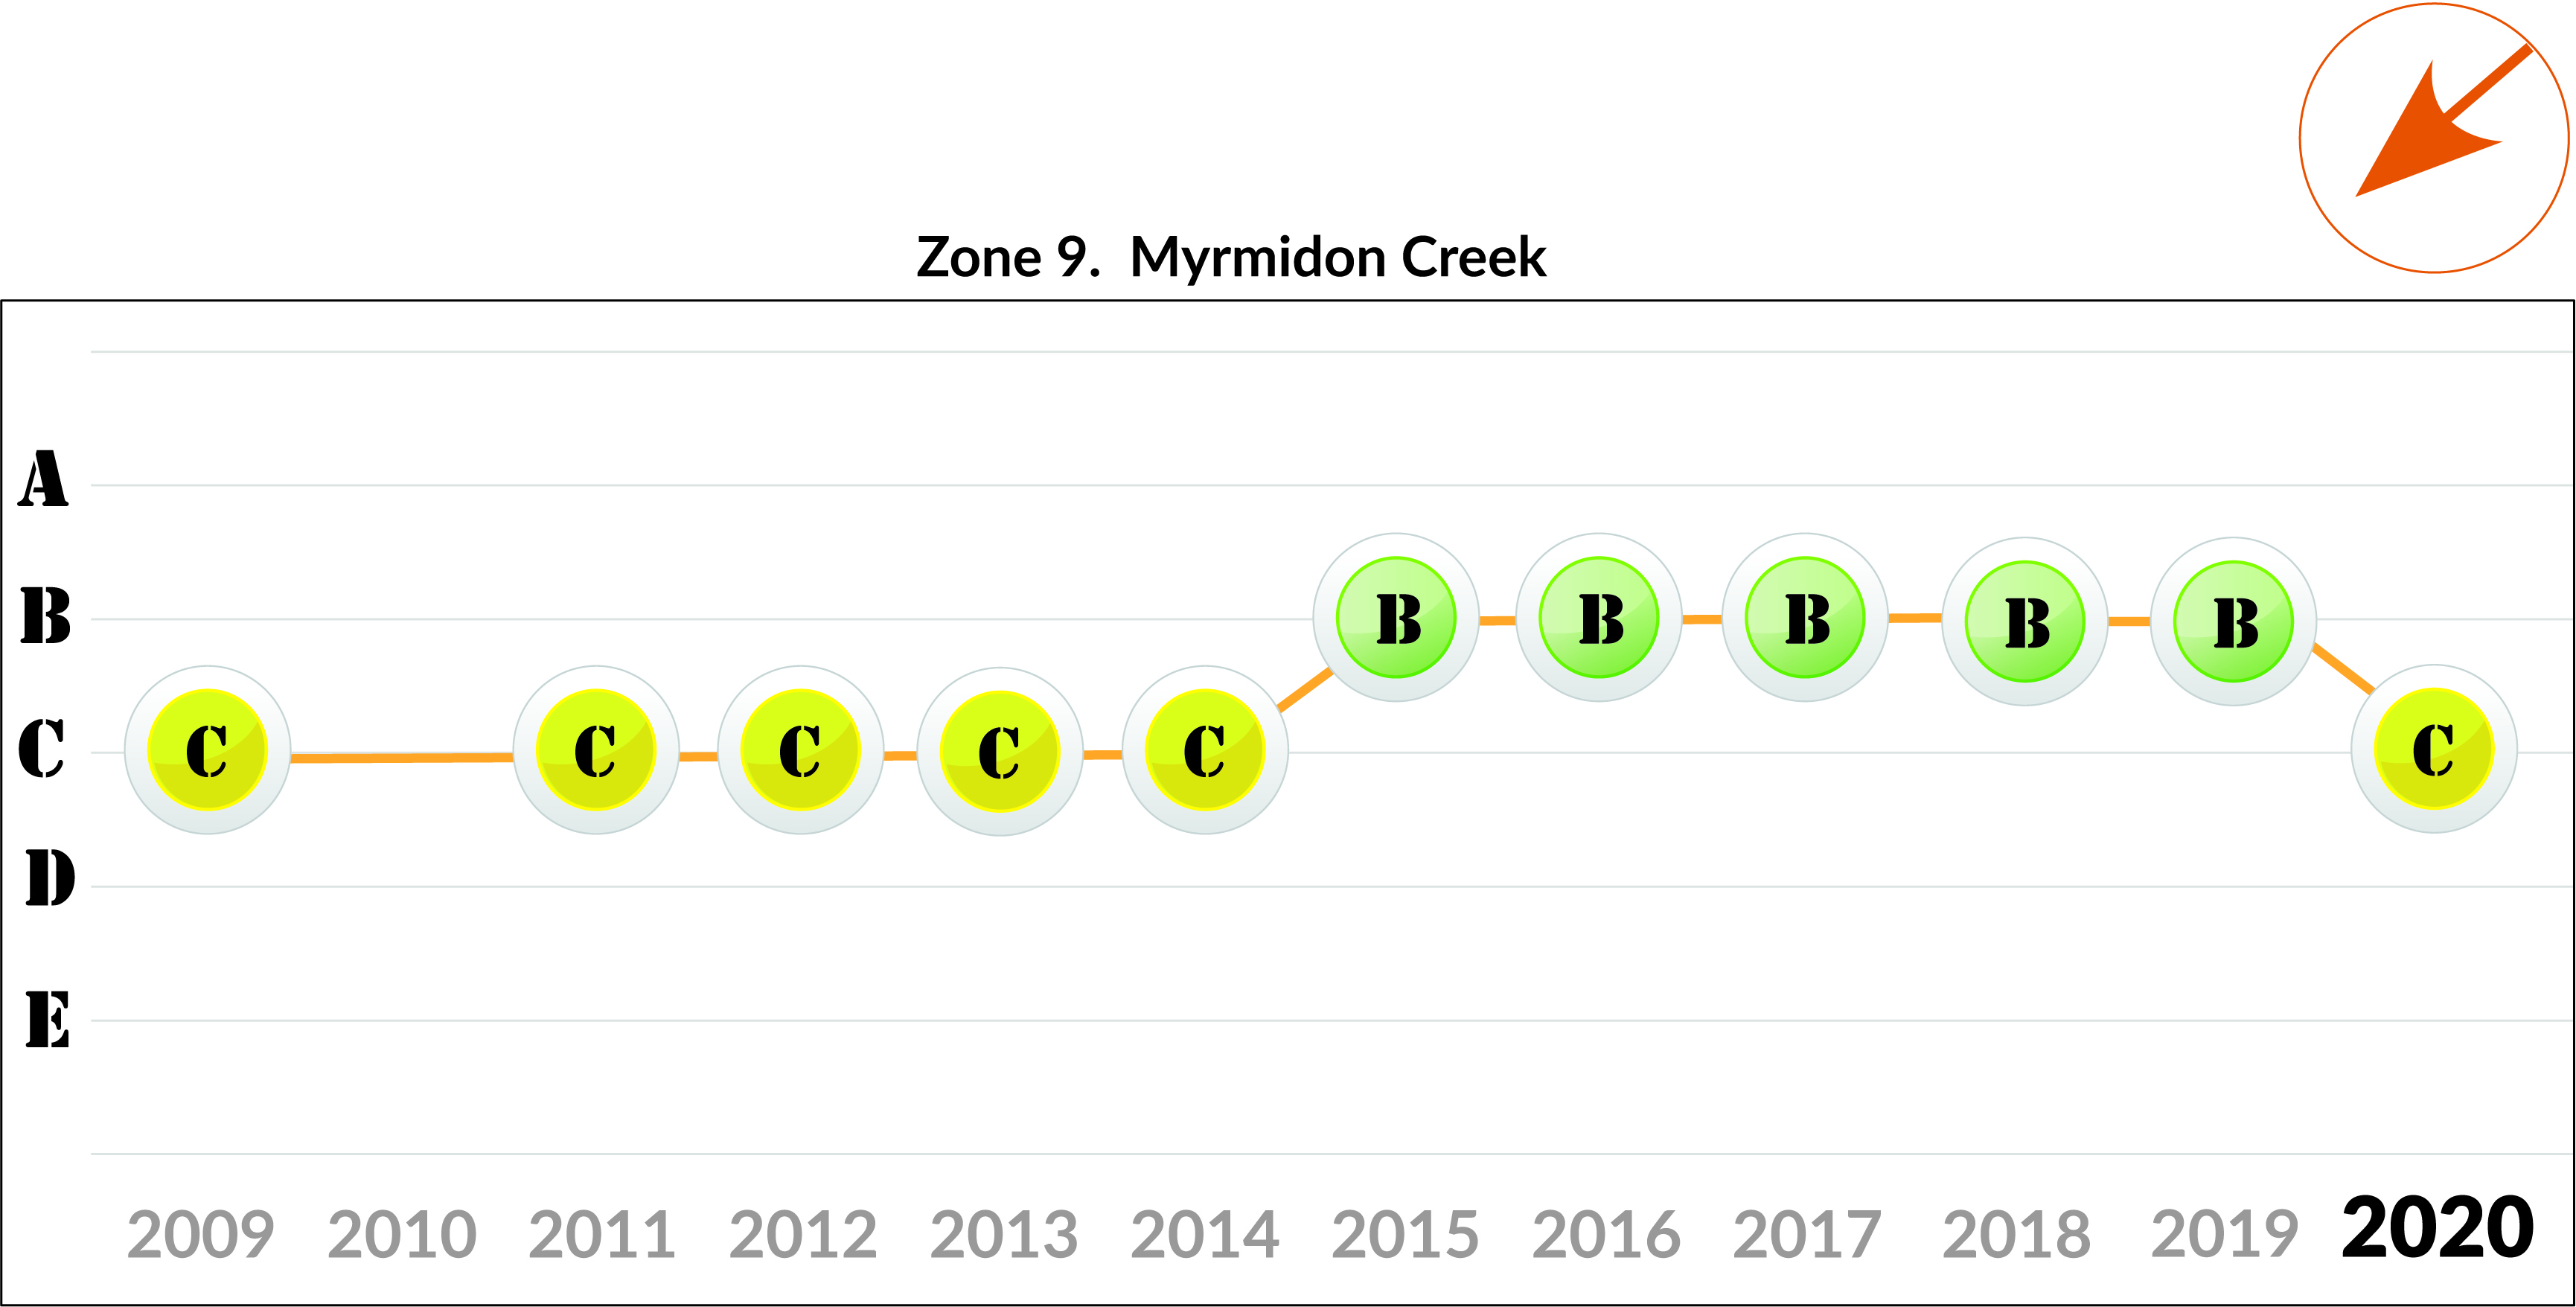 Zone 9 - Myrmidon Creek trend 2020